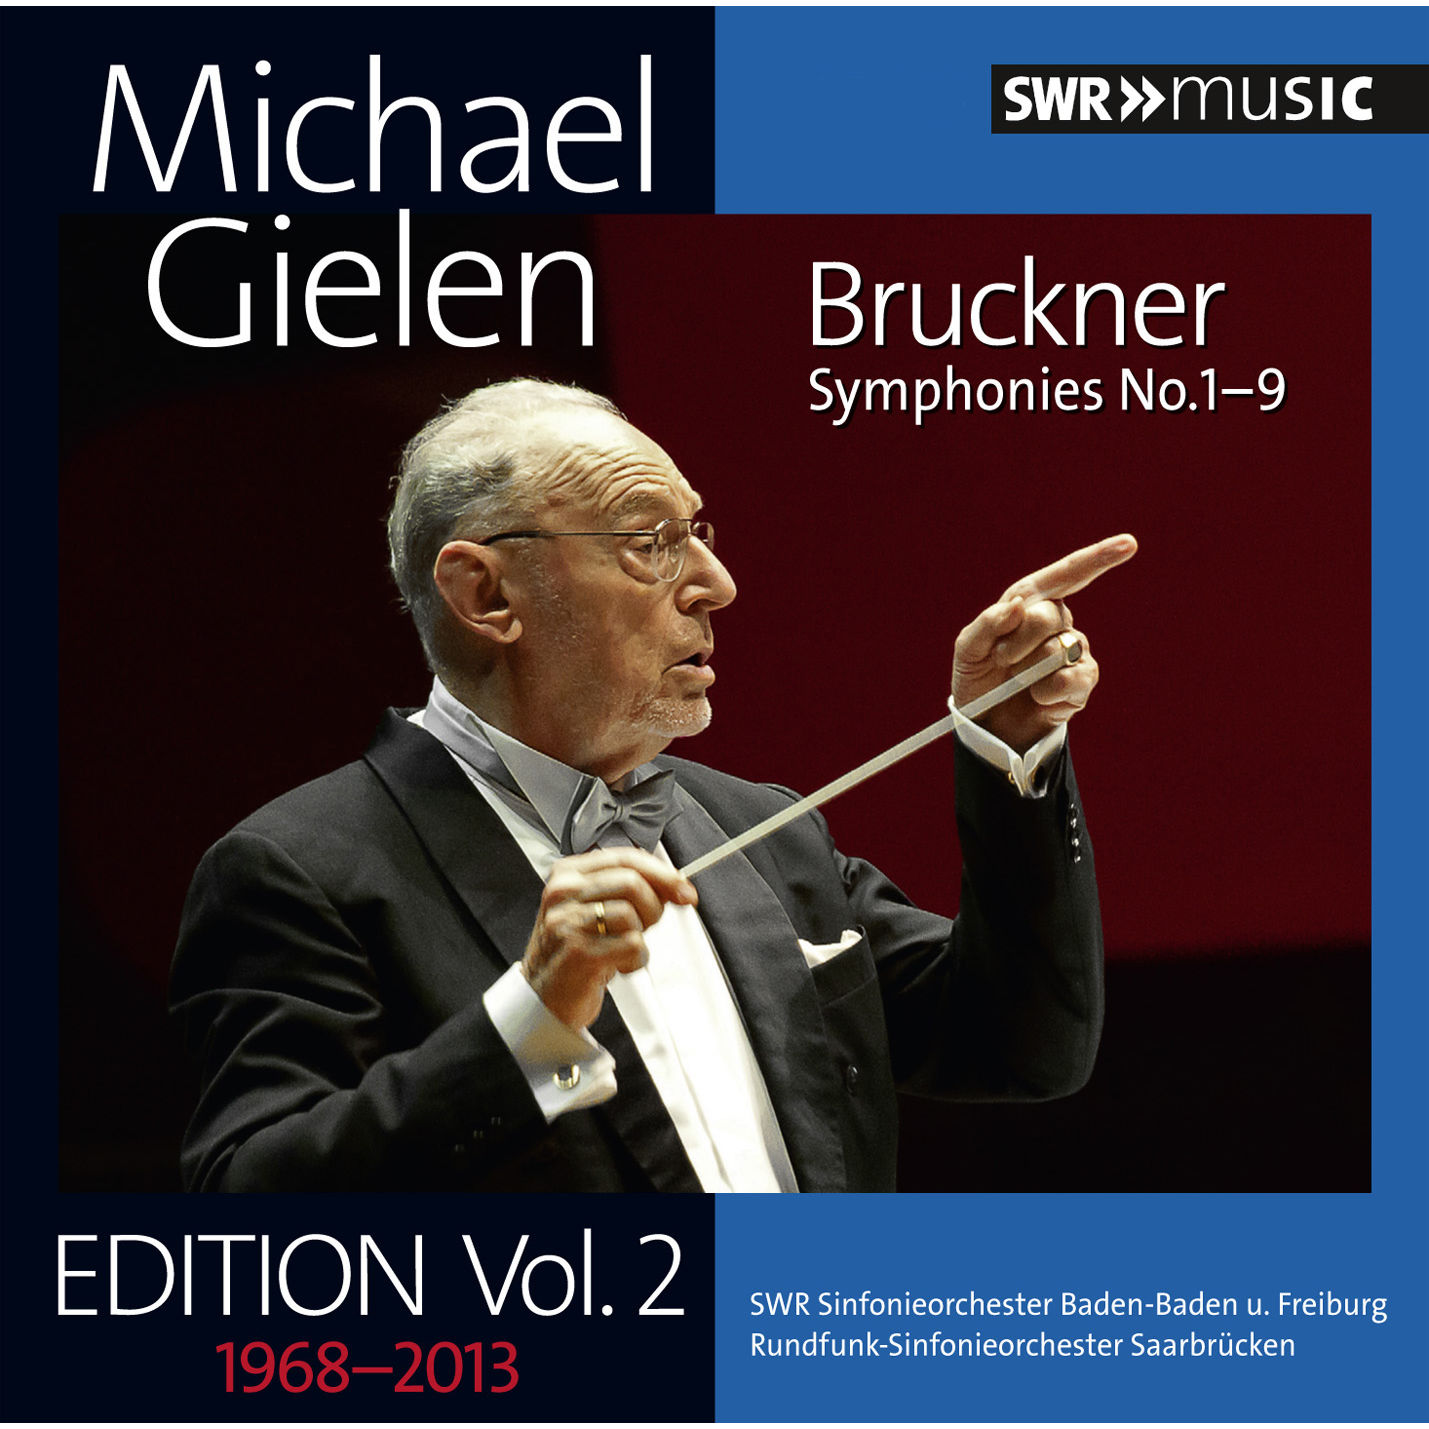 SWR Sinfonieorchester Baden Vol. 2 cd04- Bruckner Symphonies